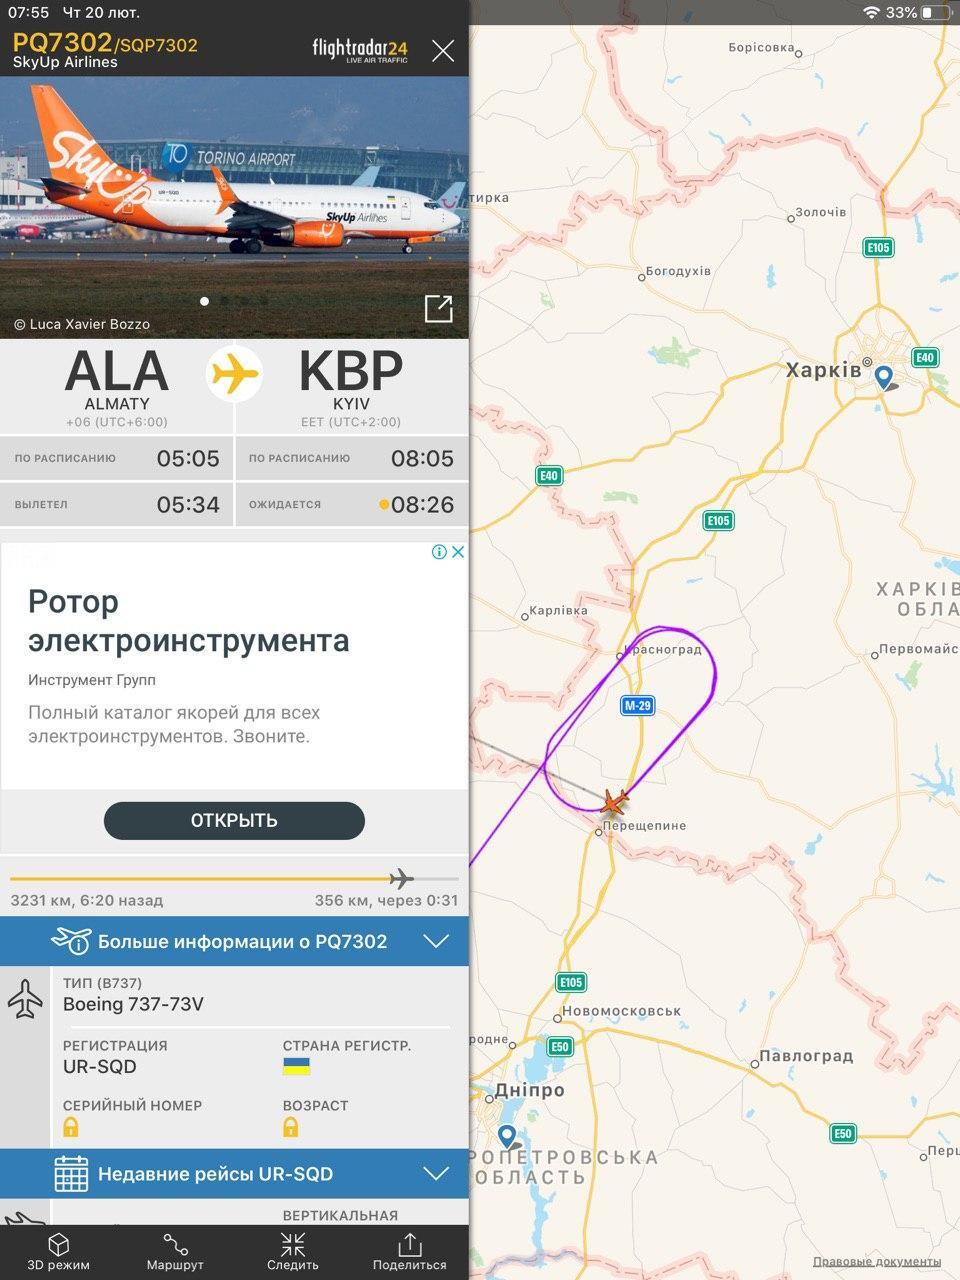 Самолет с украинцами из Уханя "застрял" в небе из-за тумана